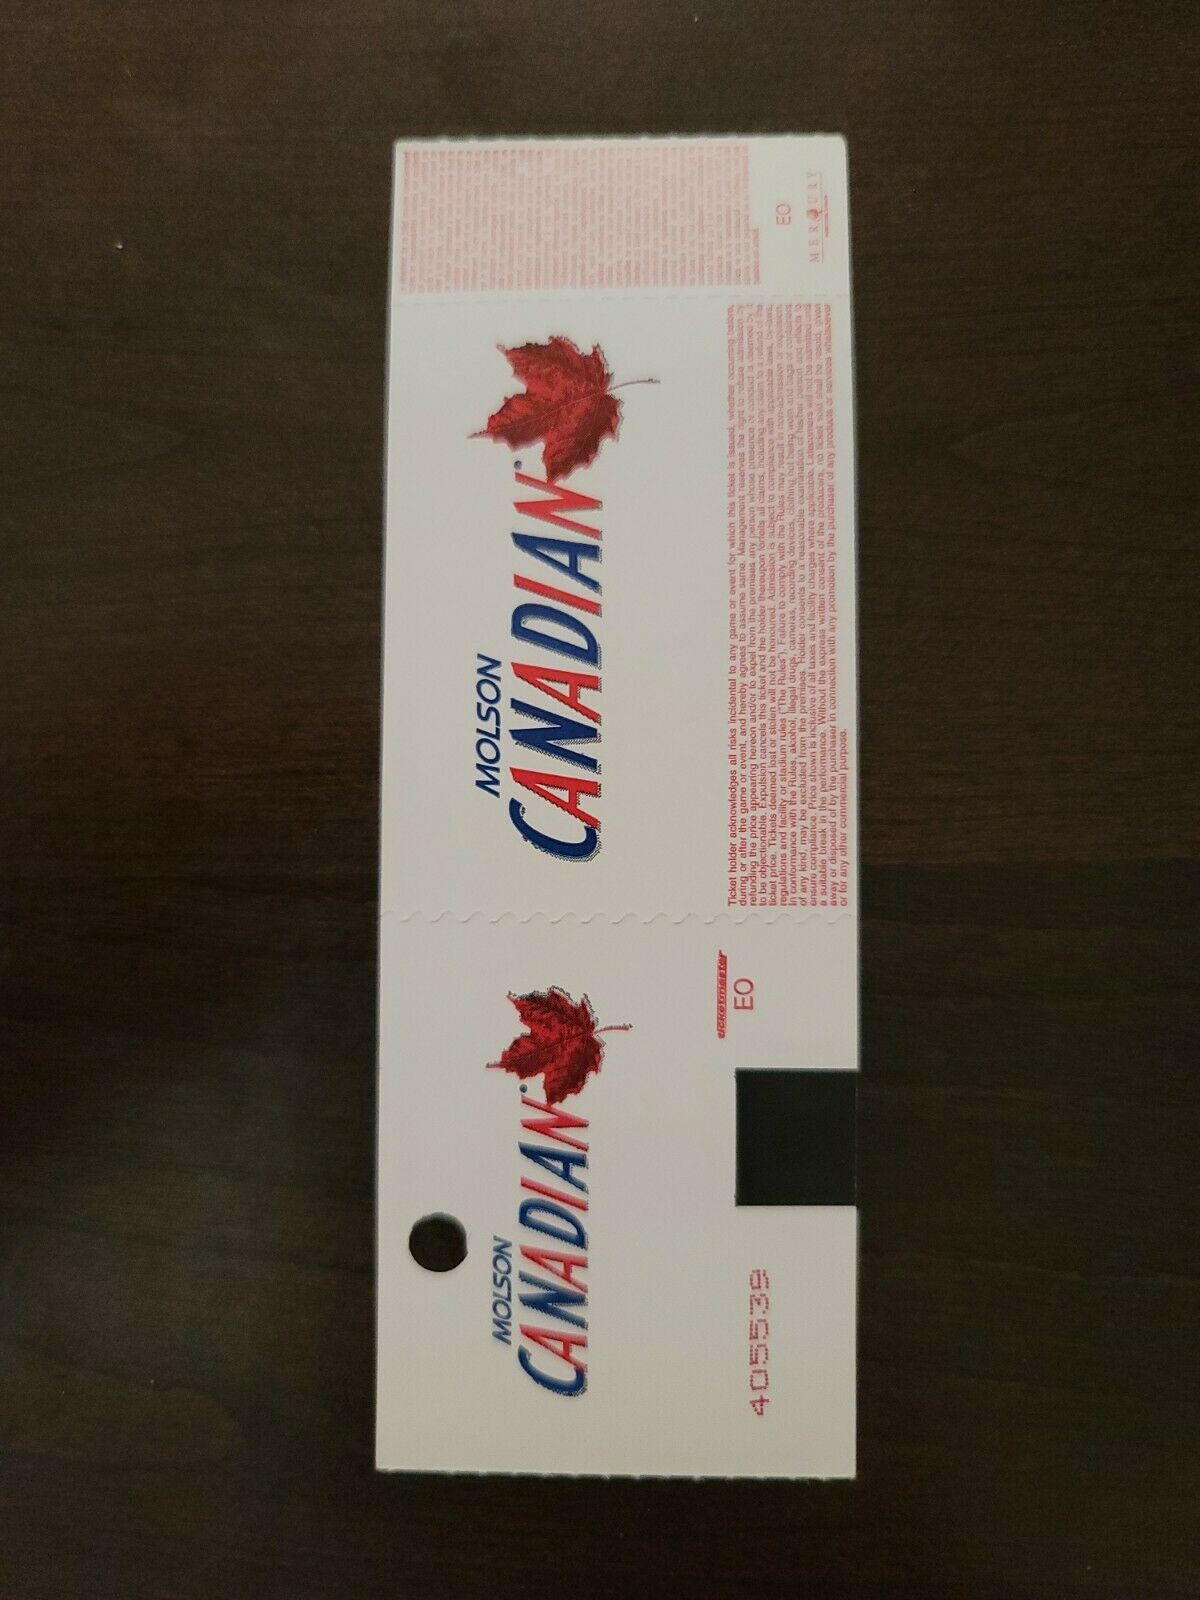 Elvis Costello 2002, Toronto Molson Amphitheater Original Concert Ticket Stub